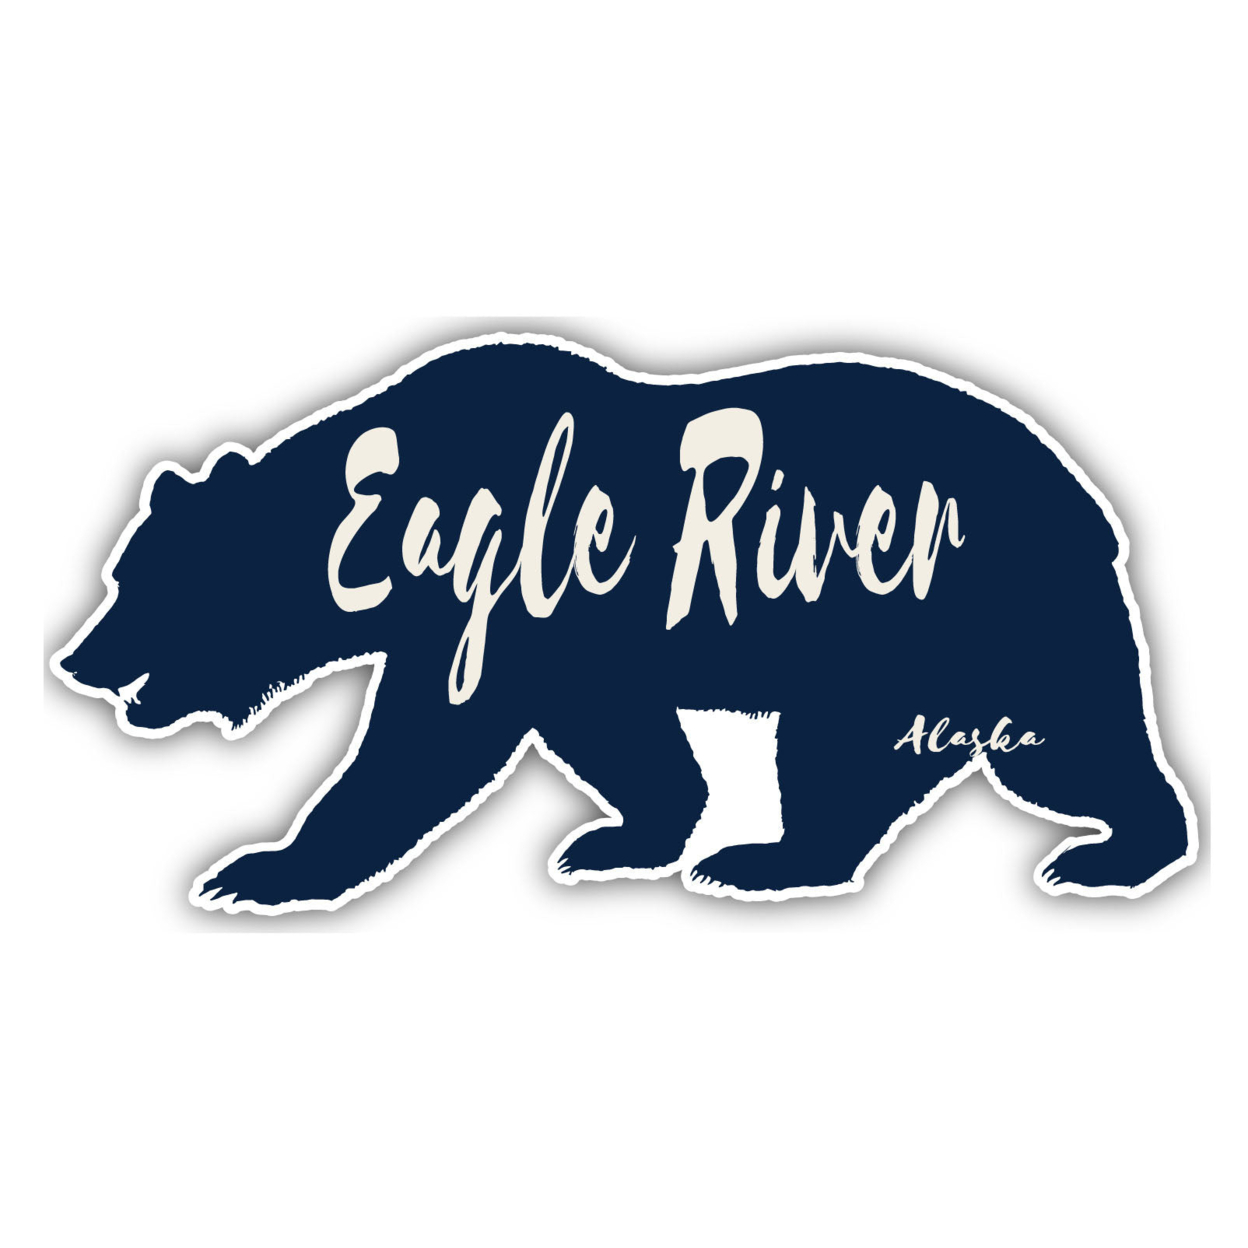 Eagle River Alaska Souvenir Decorative Stickers (Choose Theme And Size) - 4-Pack, 2-Inch, Tent